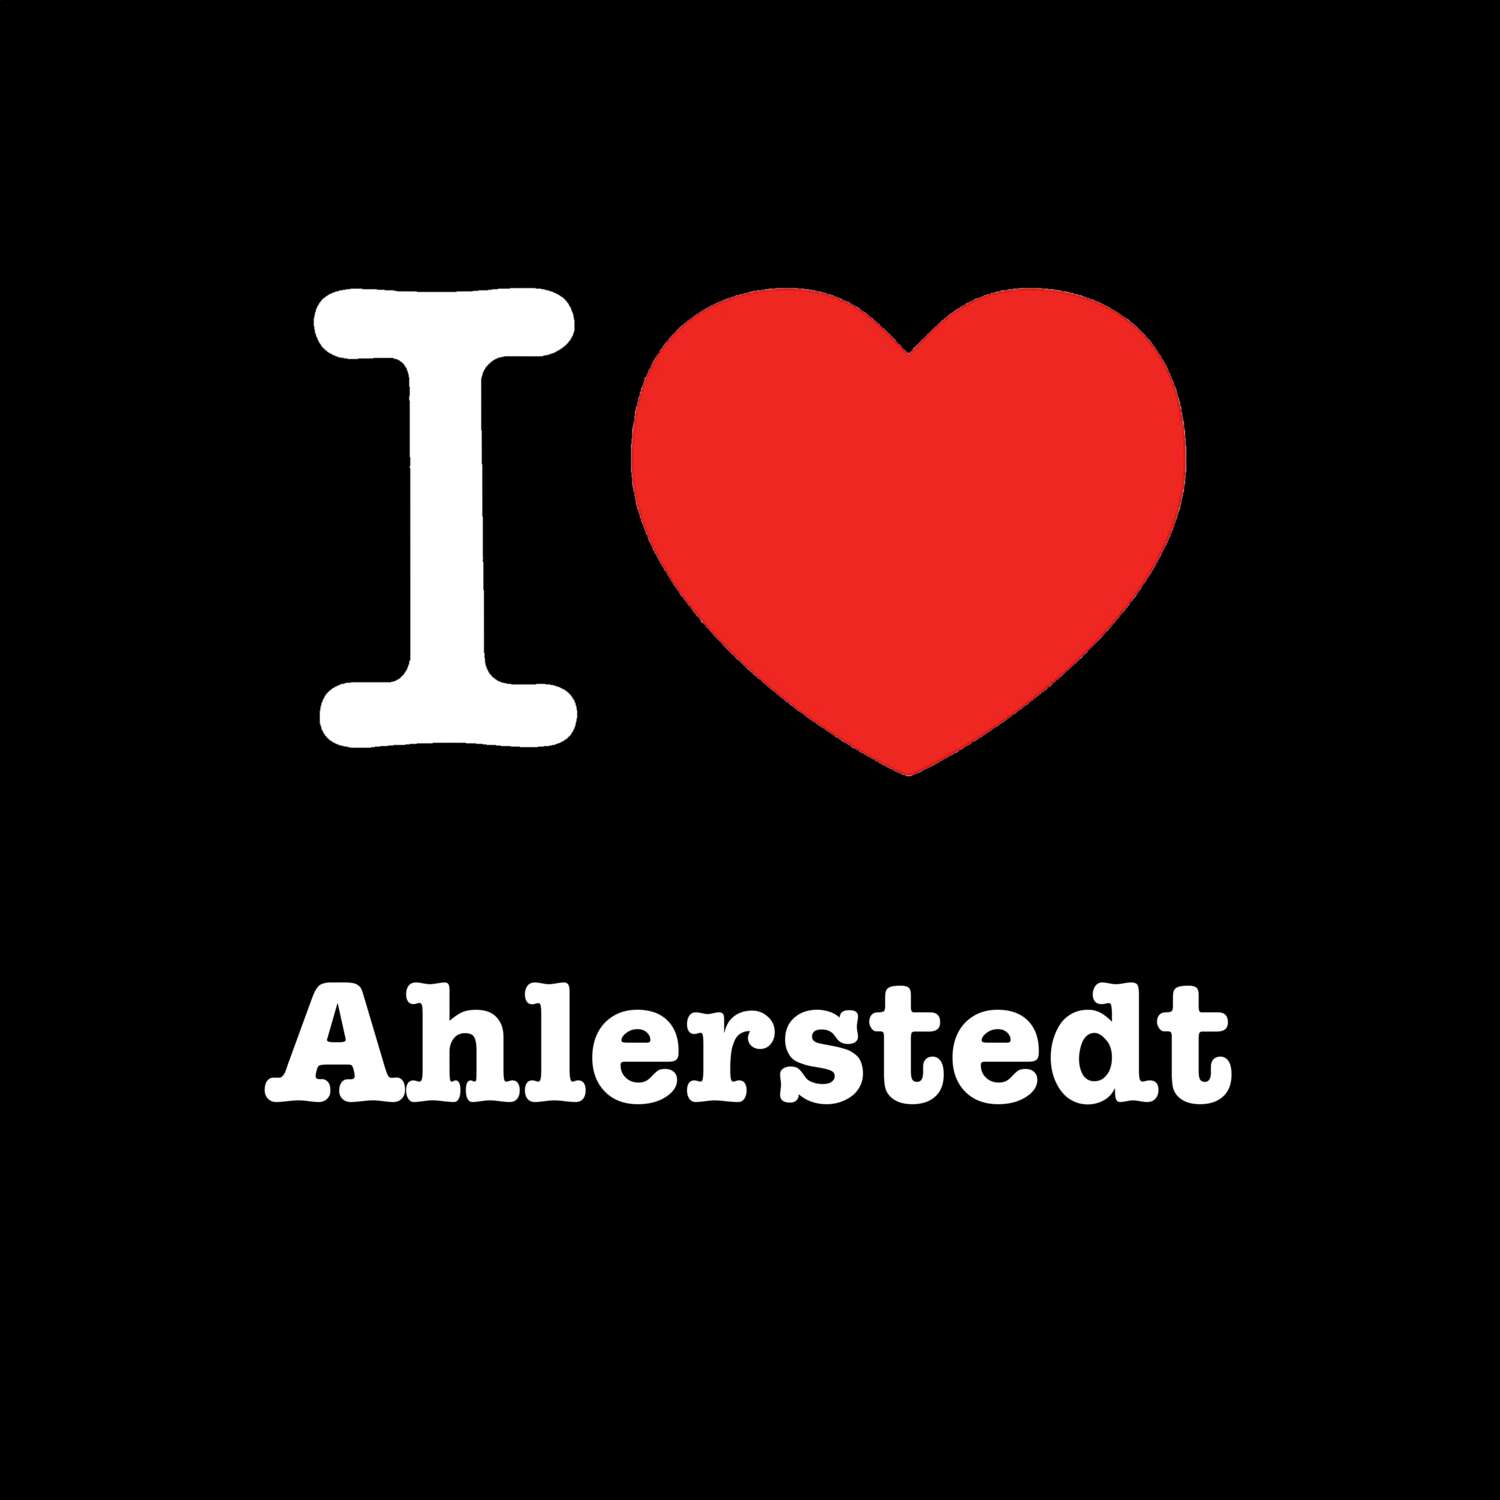 Ahlerstedt T-Shirt »I love«